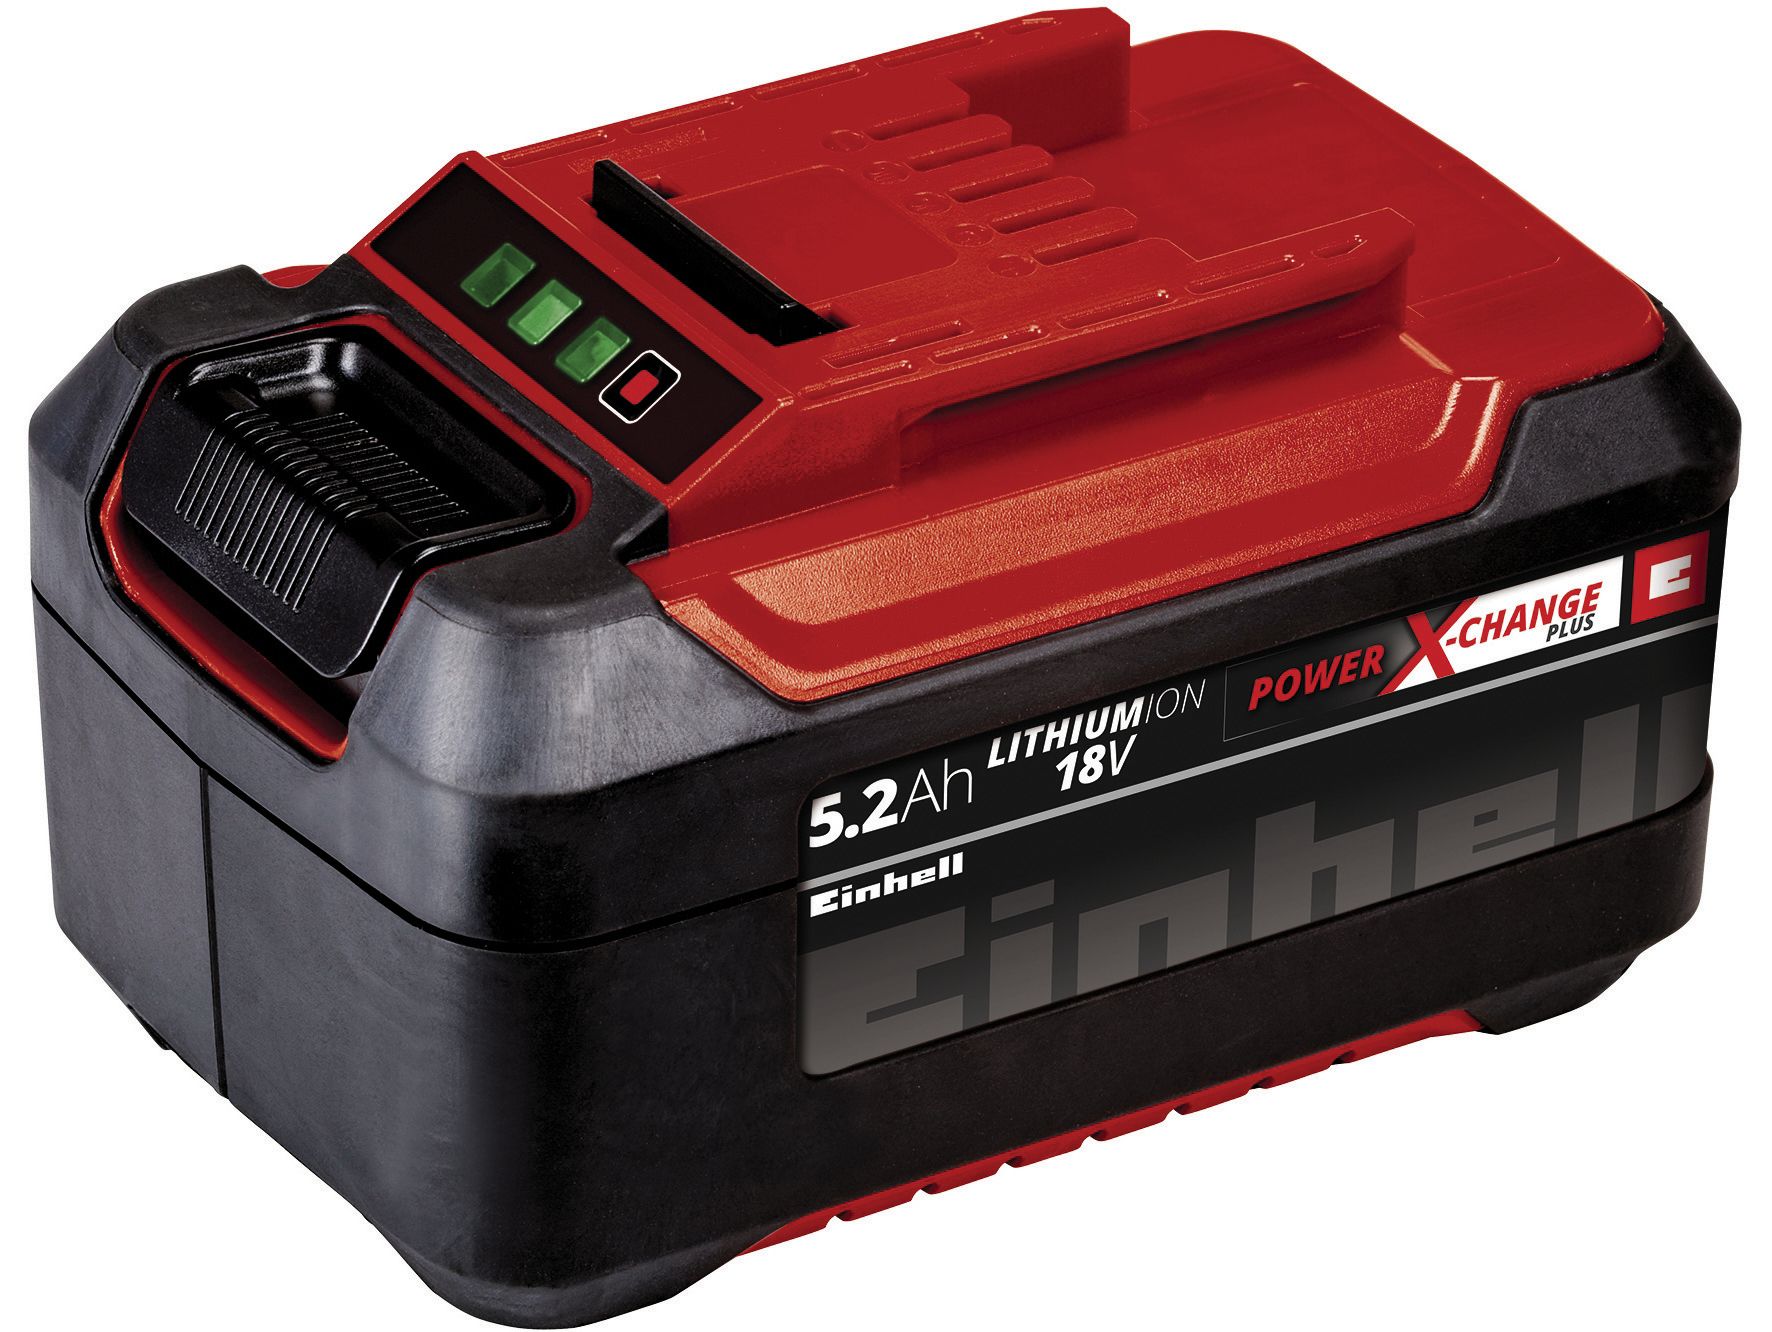 Image of Einhell Power X-Change Plus 18V 5.2Ah Battery